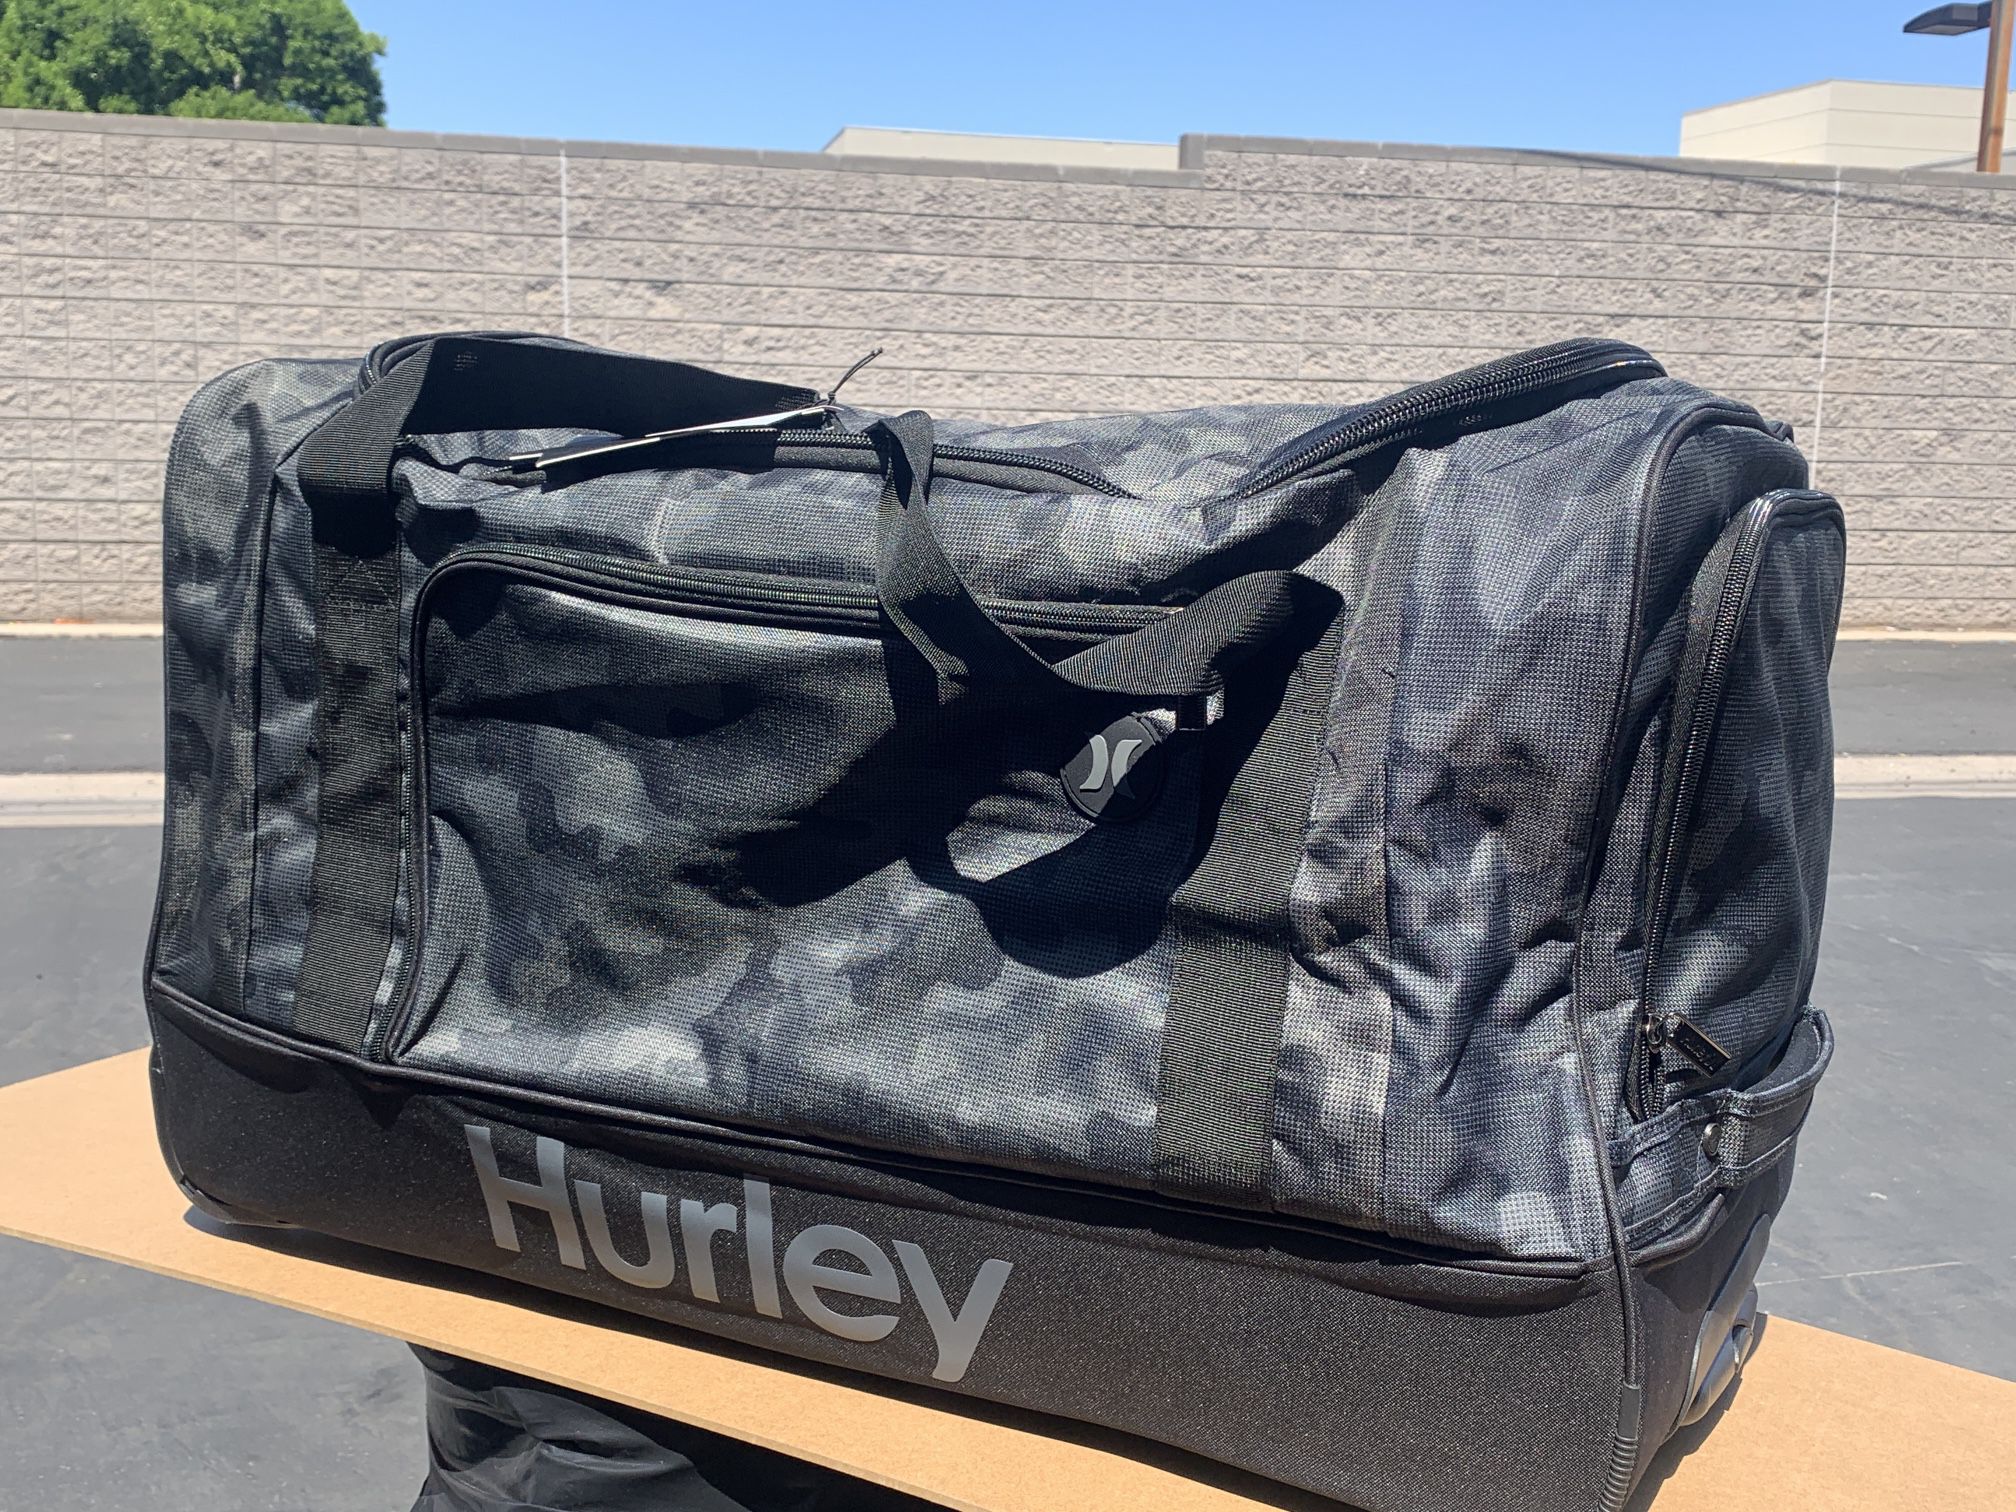 YETI Panga 75L Waterproof Duffel bag for Sale in Tucson, AZ - OfferUp